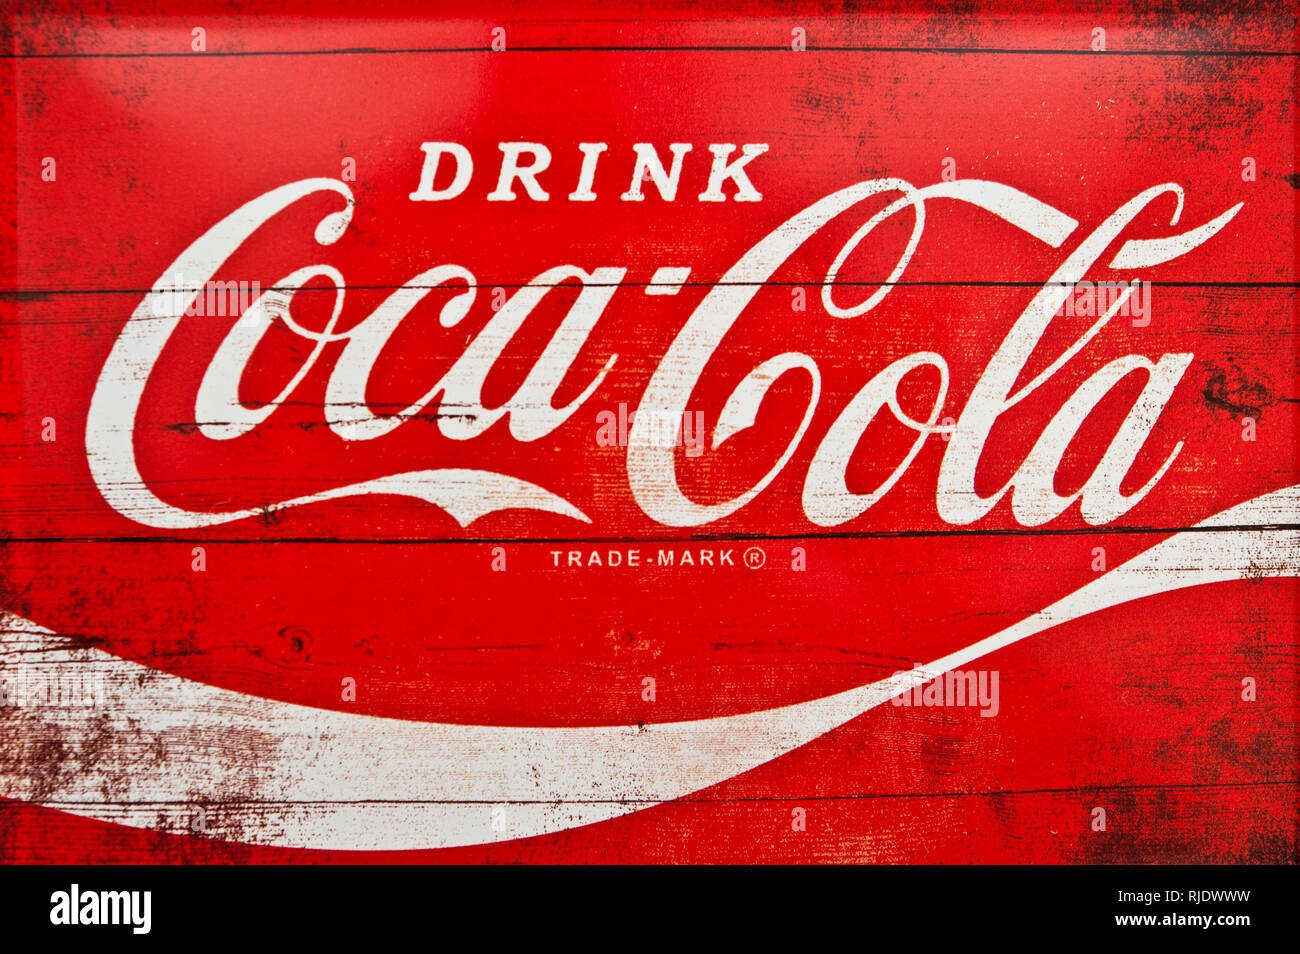 vintage Coca Cola logo Stock Photo - Alamy